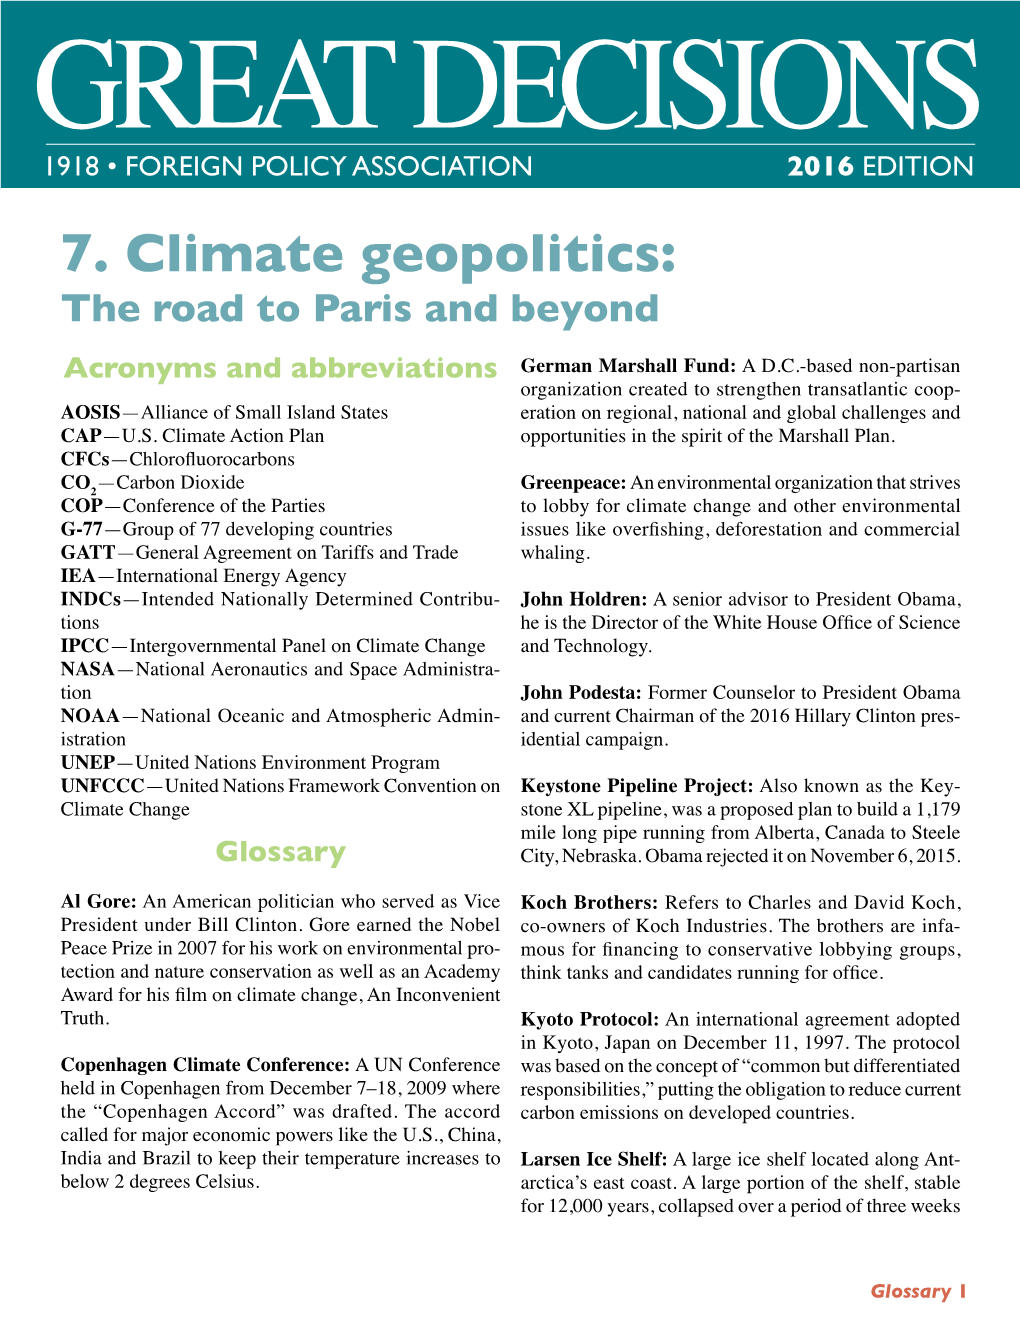 7. Climate Geopolitics